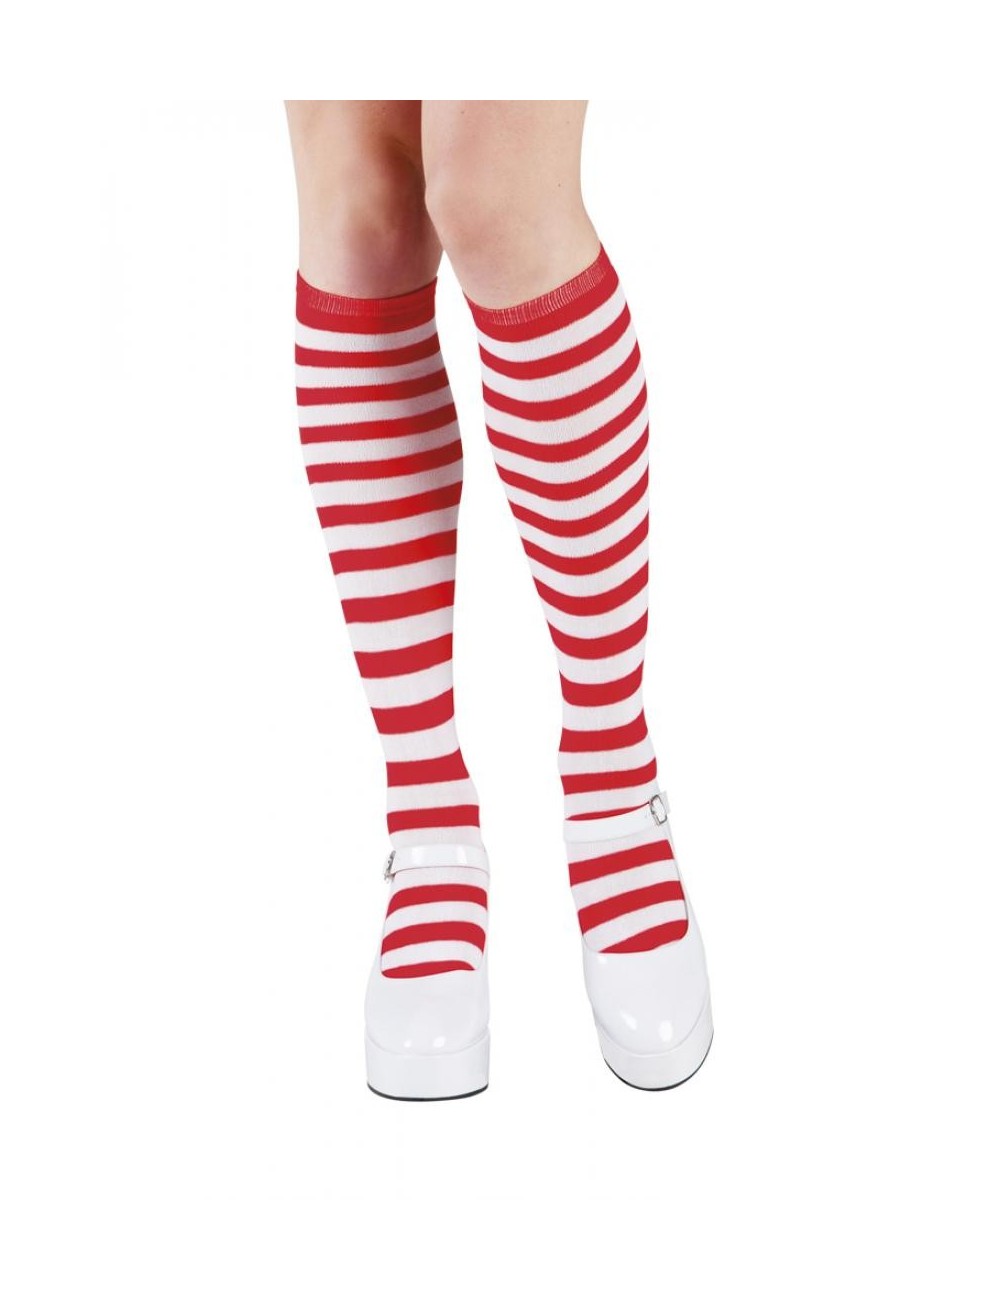 Striped socks